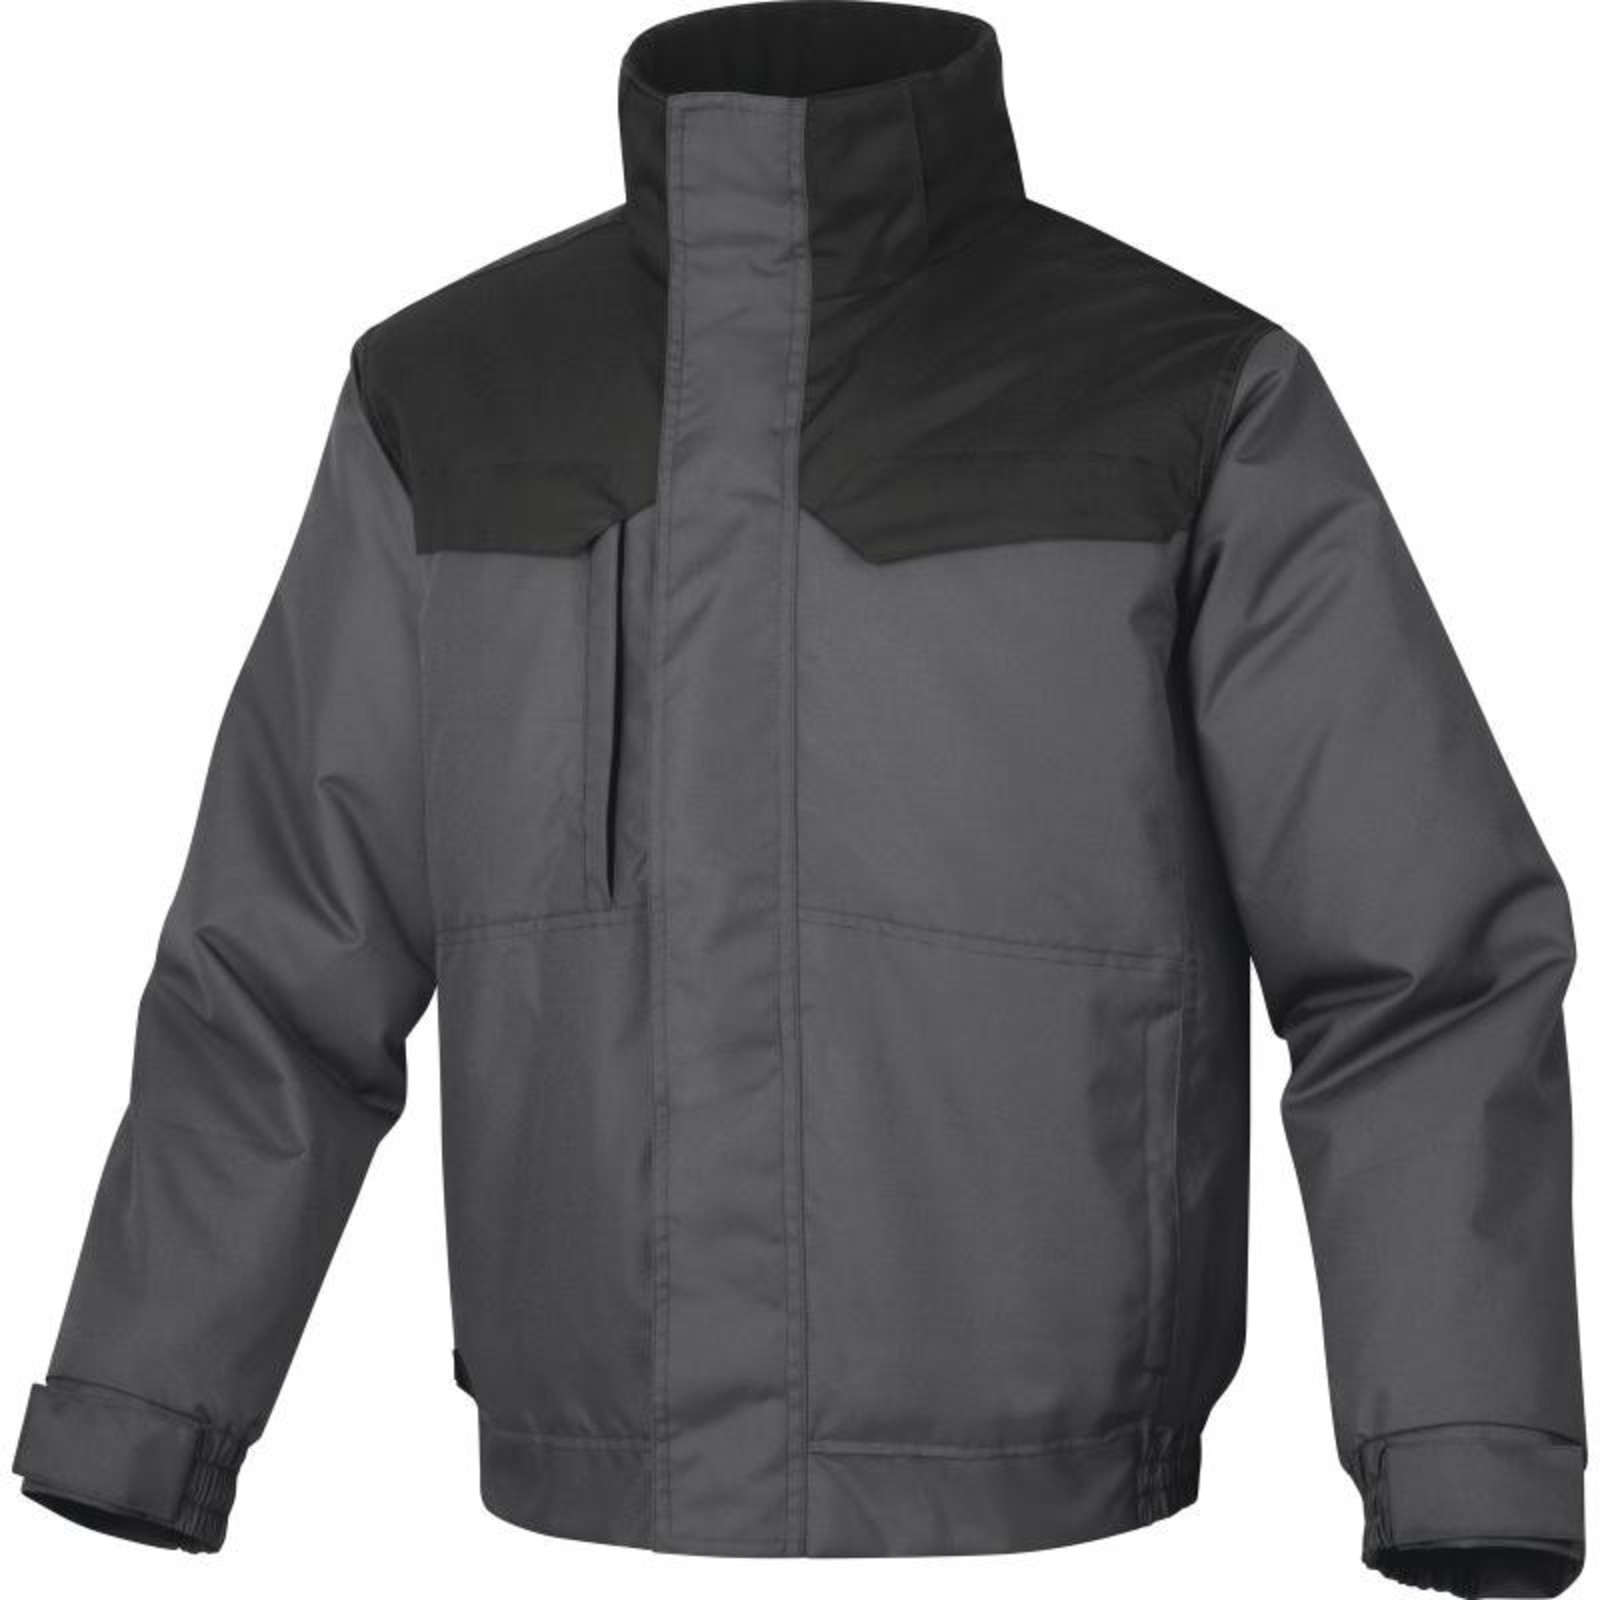 Zimná pánska bunda Delta Plus Northwood3 - veľkosť: 3XL, farba: sivá/čierna